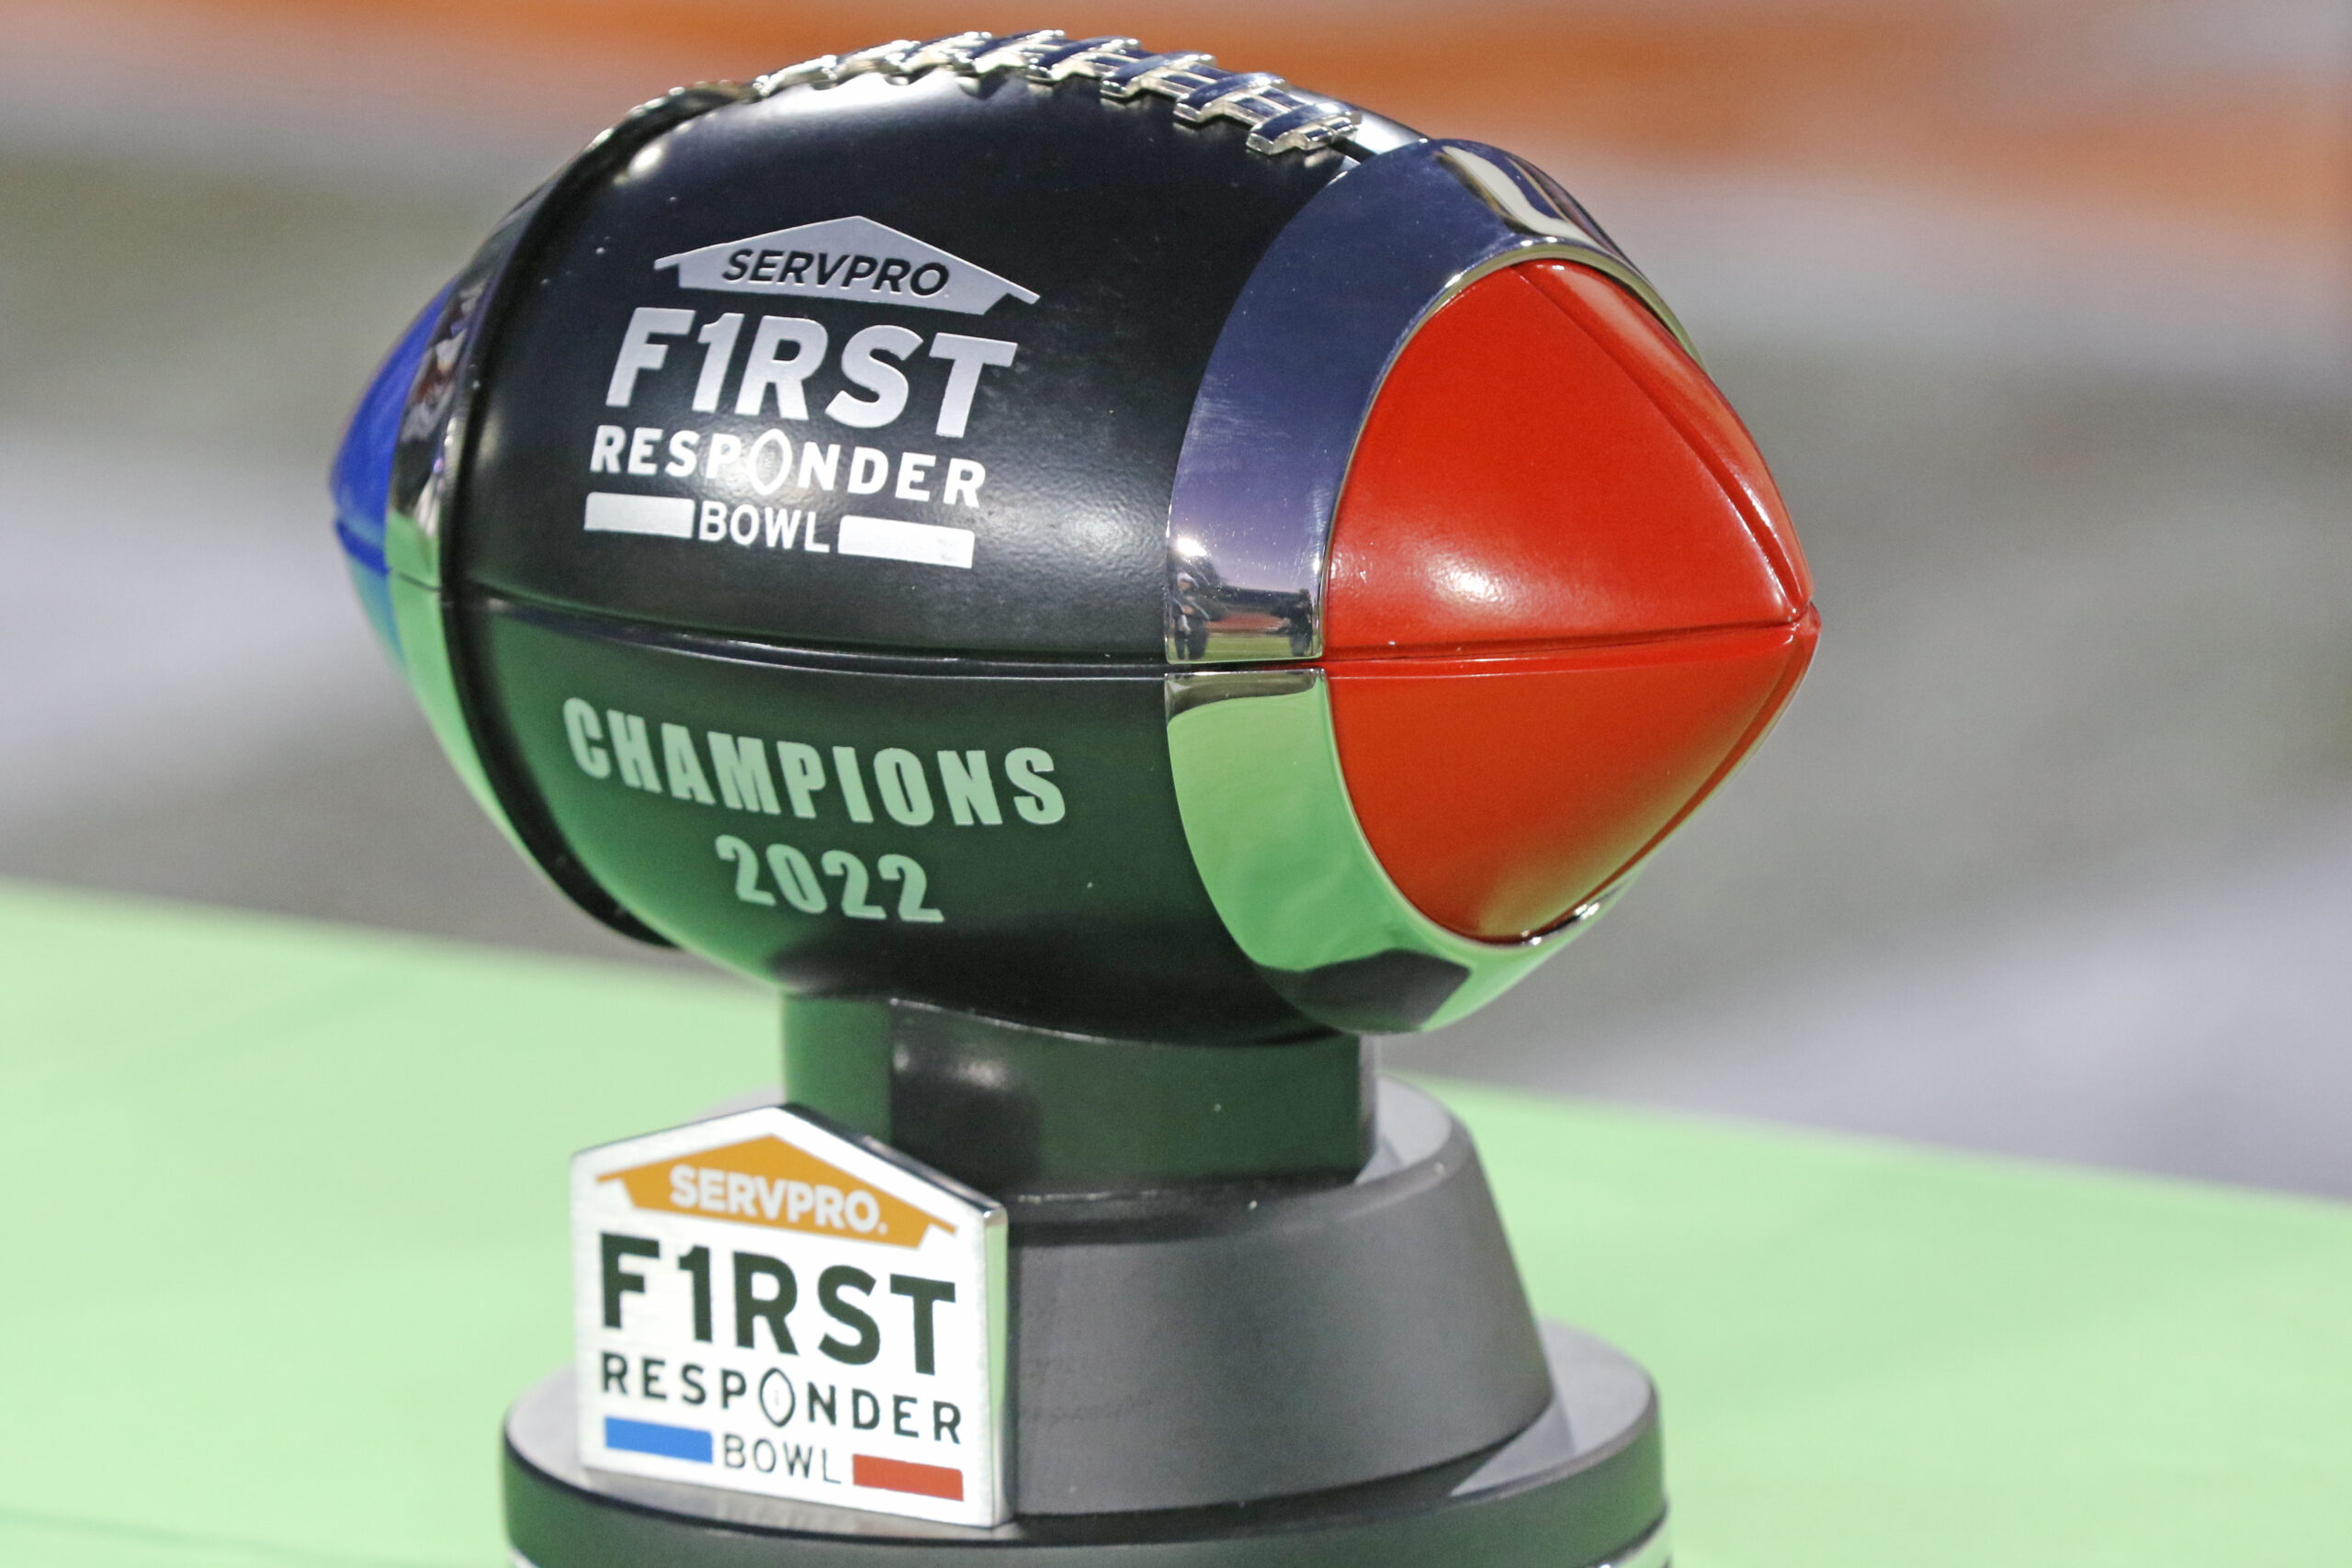 The 2022 Servpro First Responder Bowl trophy